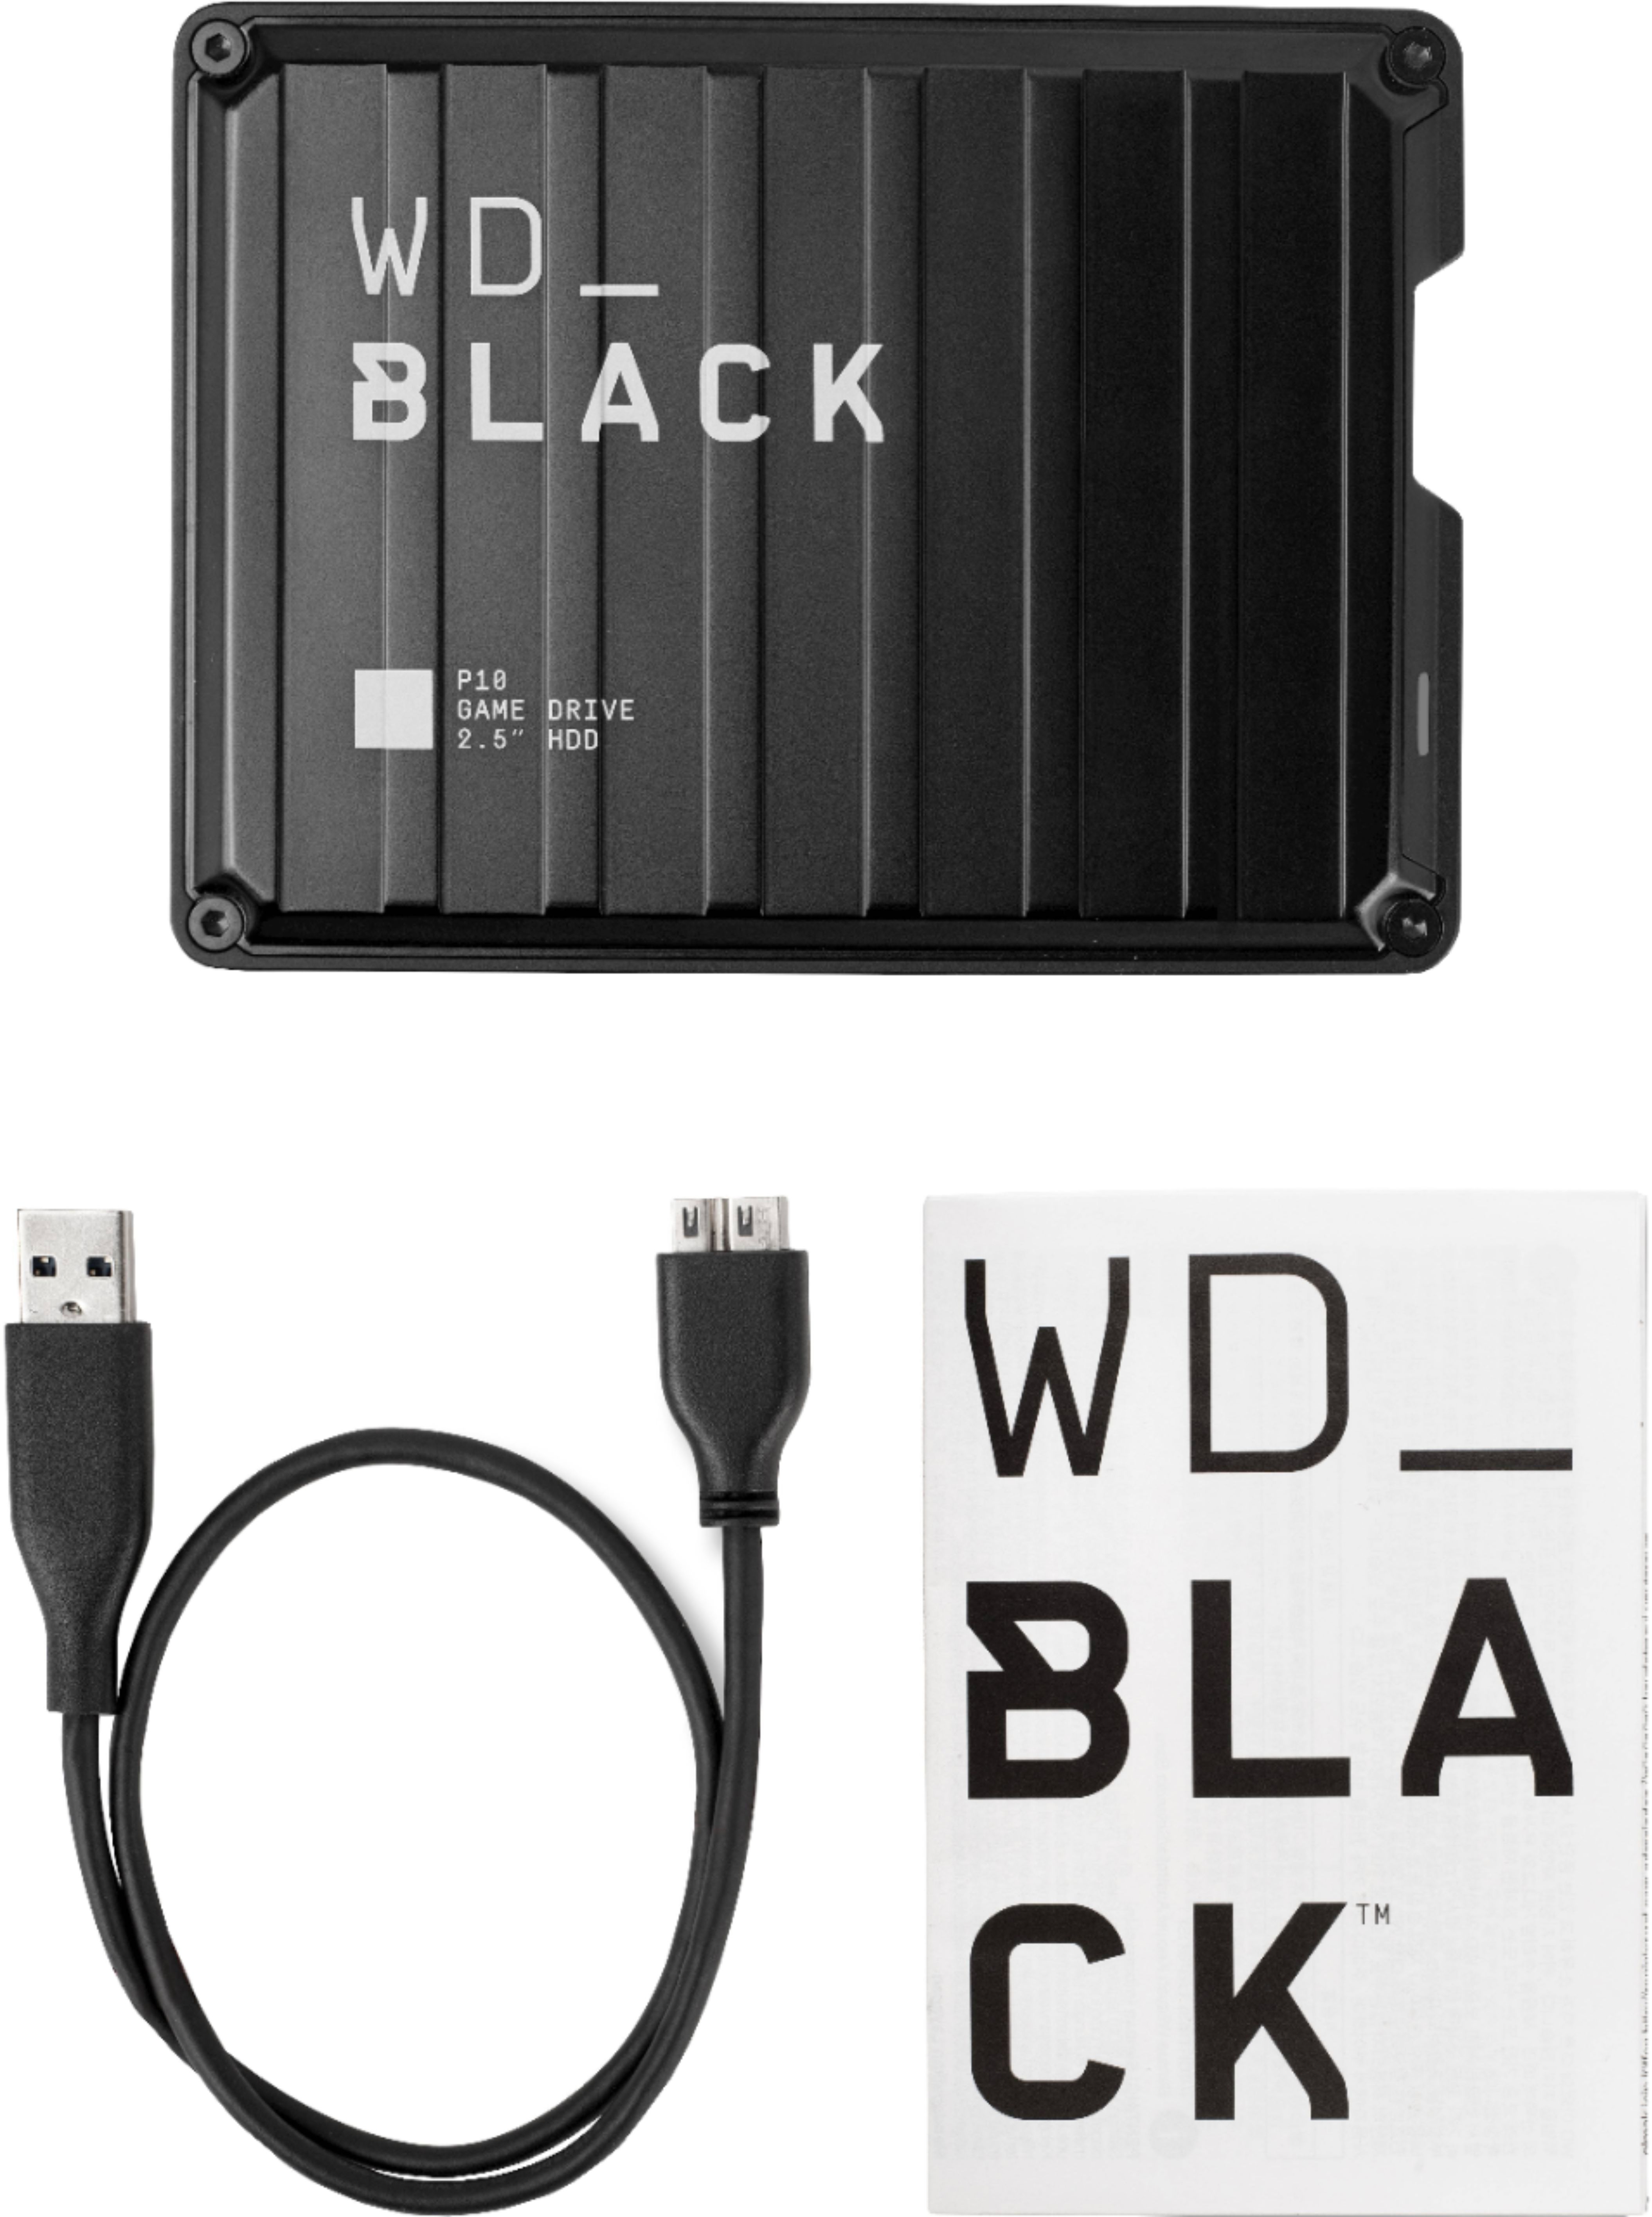 Wd Wd Black P10 2tb Game Drive External Usb 3 2 Gen 1 Portable Hard Drive Black Wdba2w00bbk Wesn Best Buy